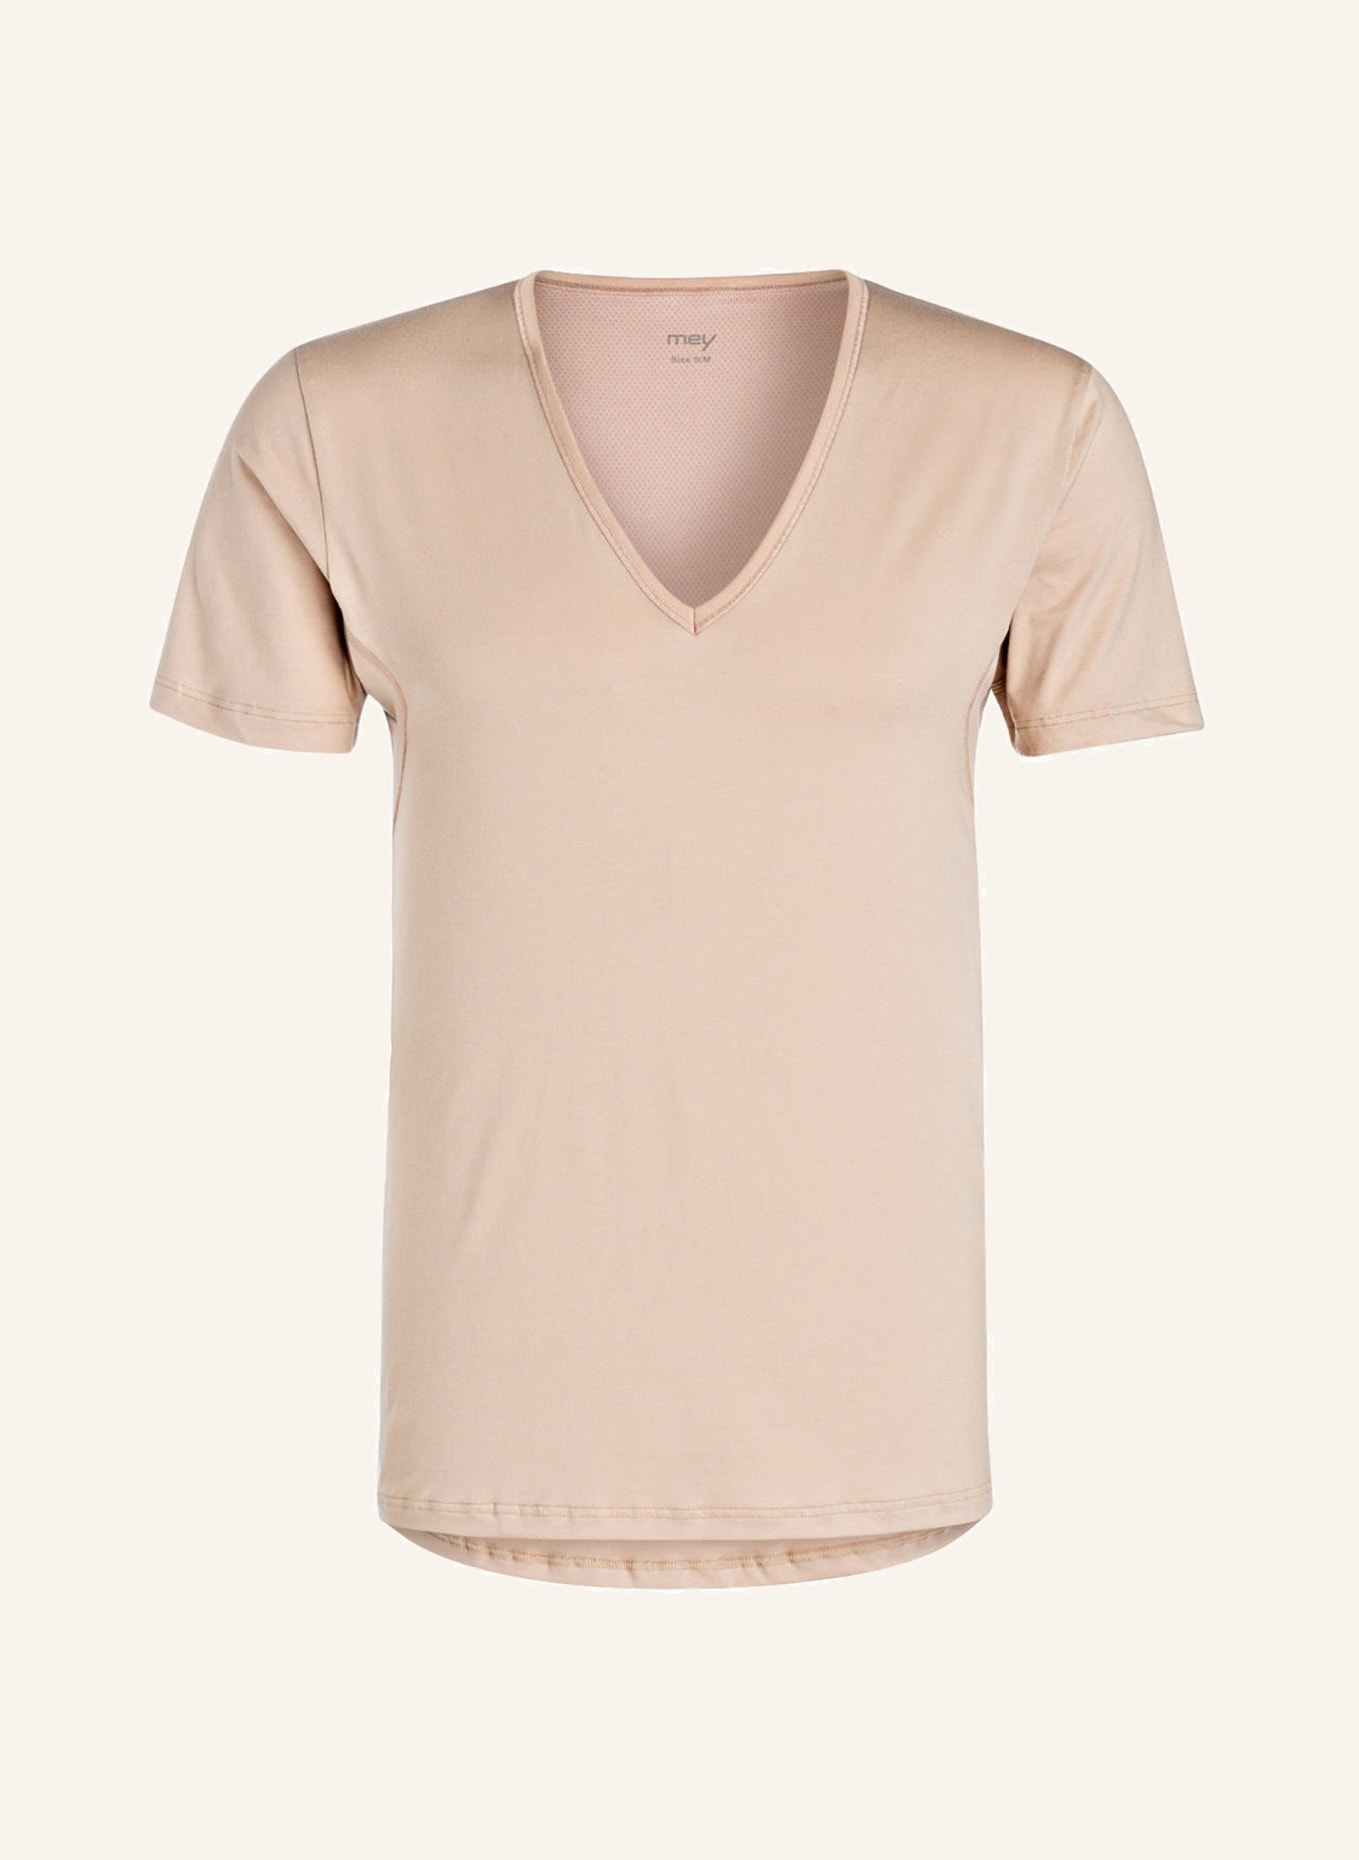 mey V-Shirt Serie DRY COTTON, Farbe: NUDE (Bild 1)